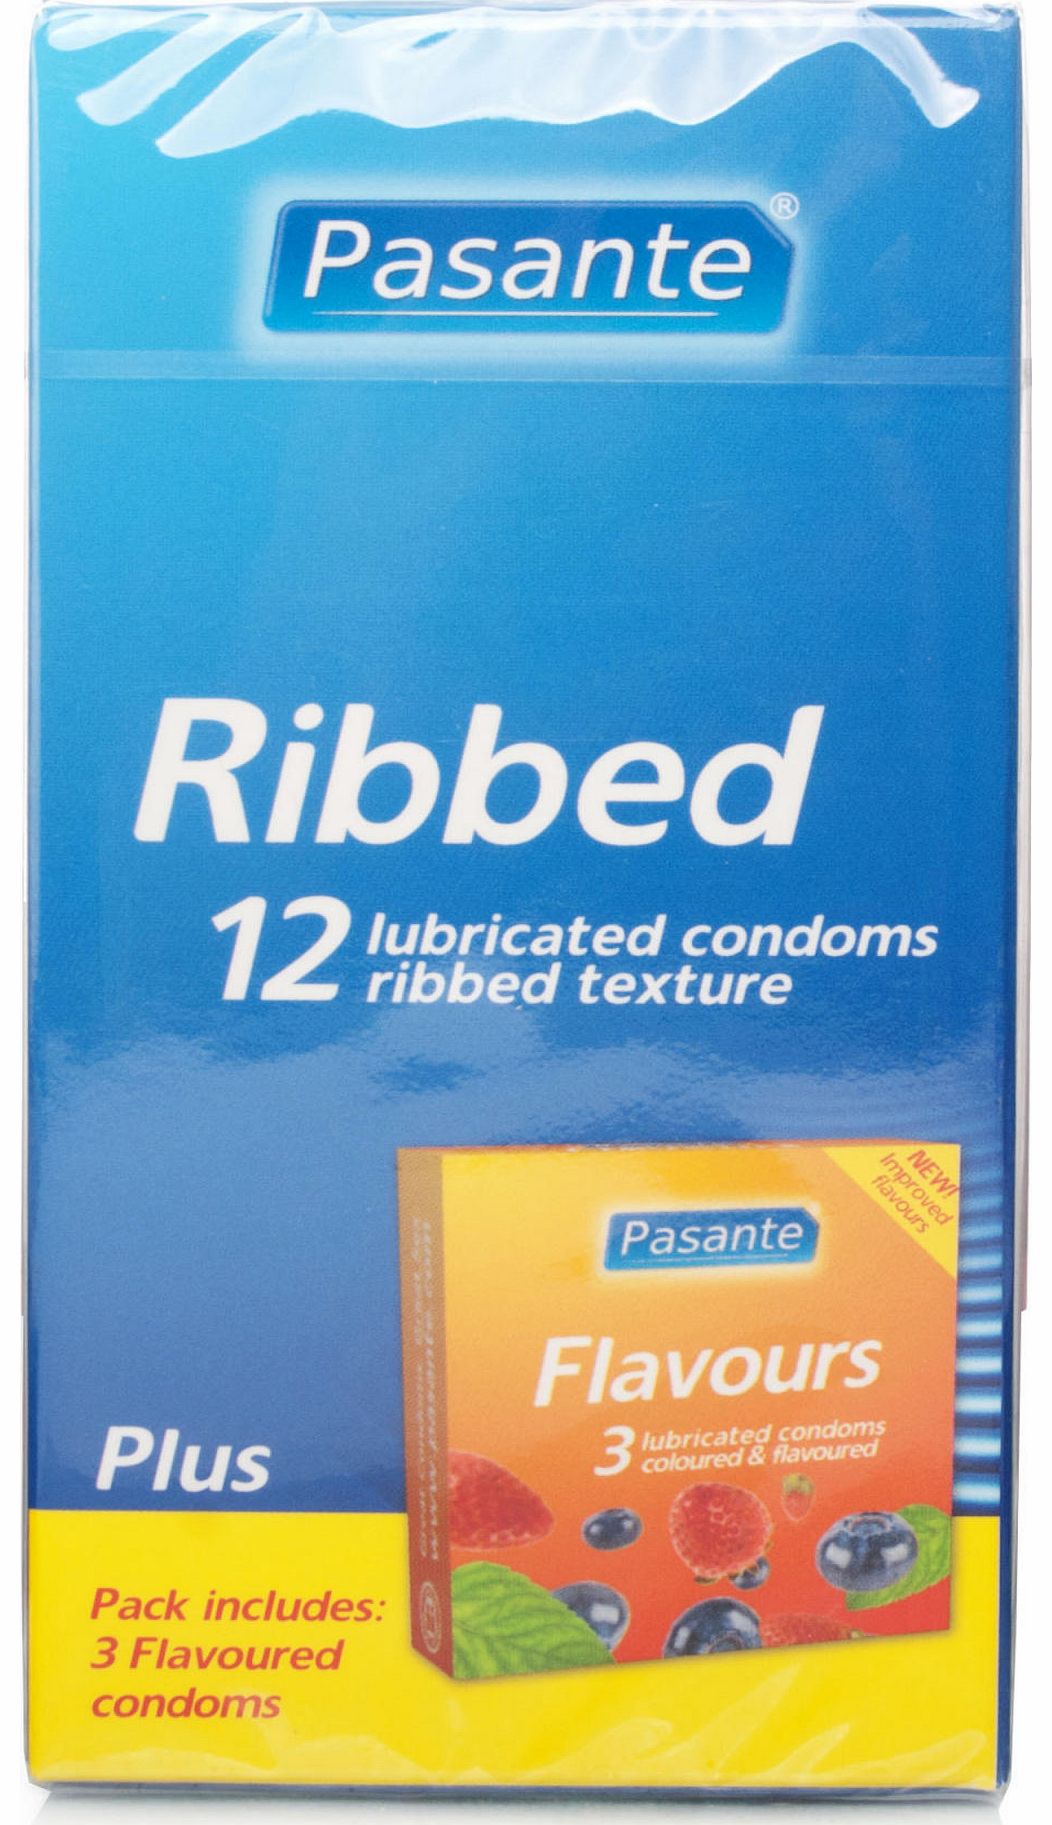 Ribbed Condoms